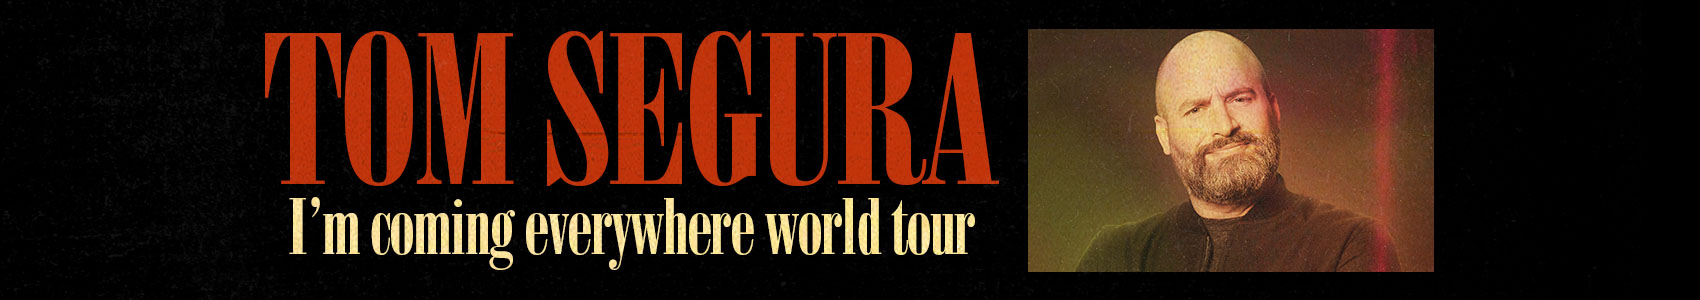 TOM SEGURA ANNOUNCES I’M COMING EVERYWHERE – WORLD TOUR IS COMING TO AUSTRALIA & NEW ZEALAND 